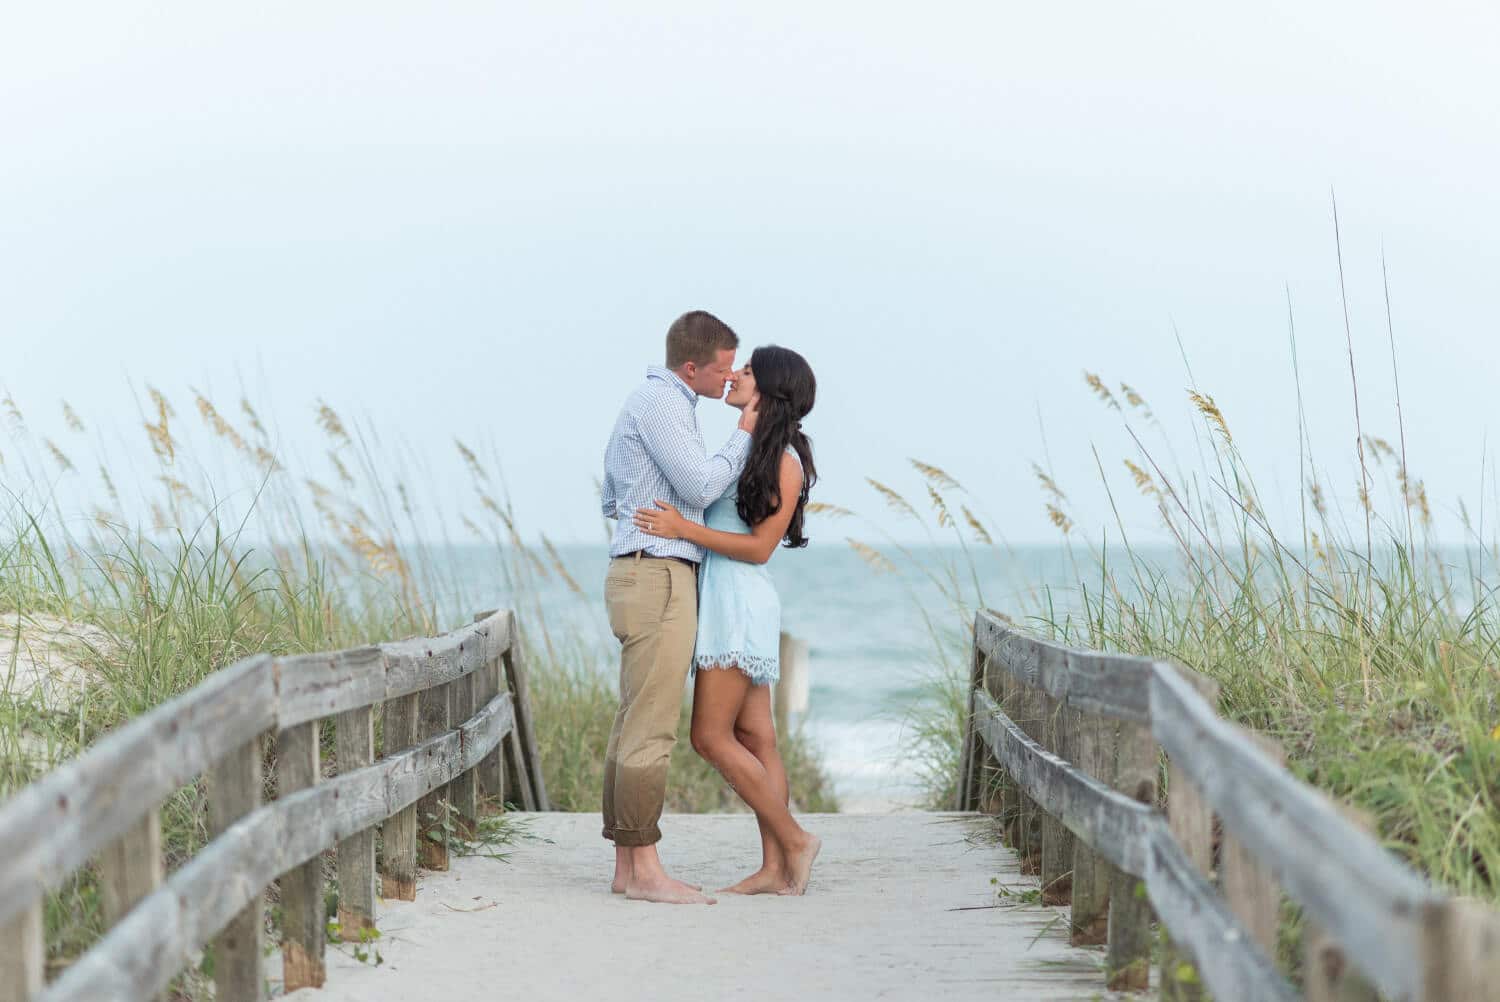 Kiss on a beach walkway by the sea oats